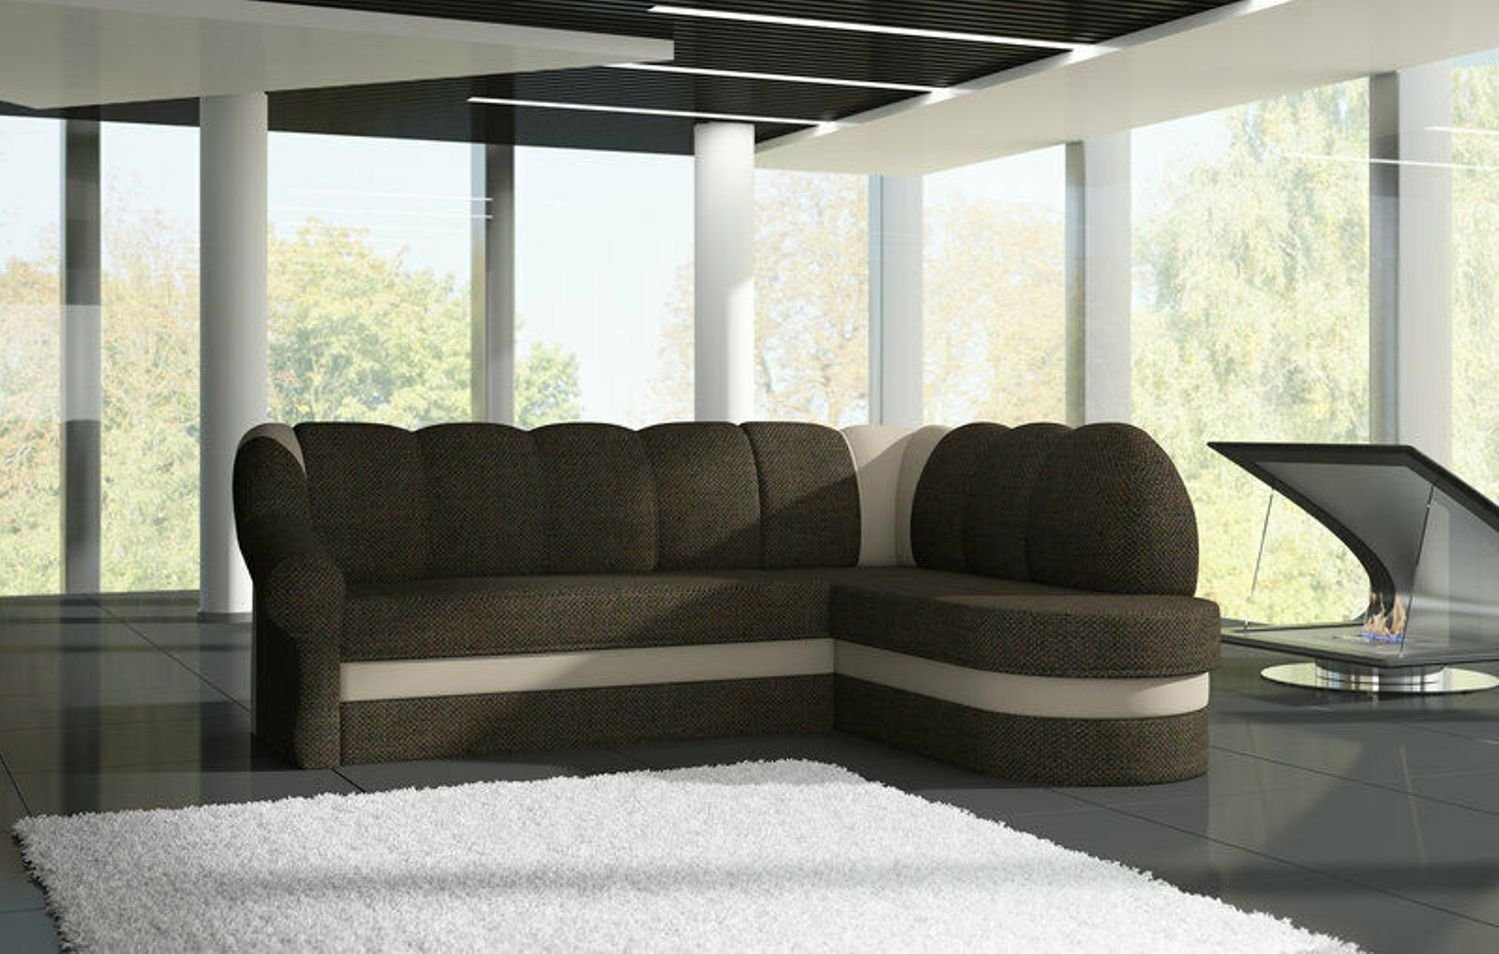 JVmoebel Ecksofa, Design Schlafsofas Ecksofa Bettfunktion Couch Leder Textil Braun/Beige